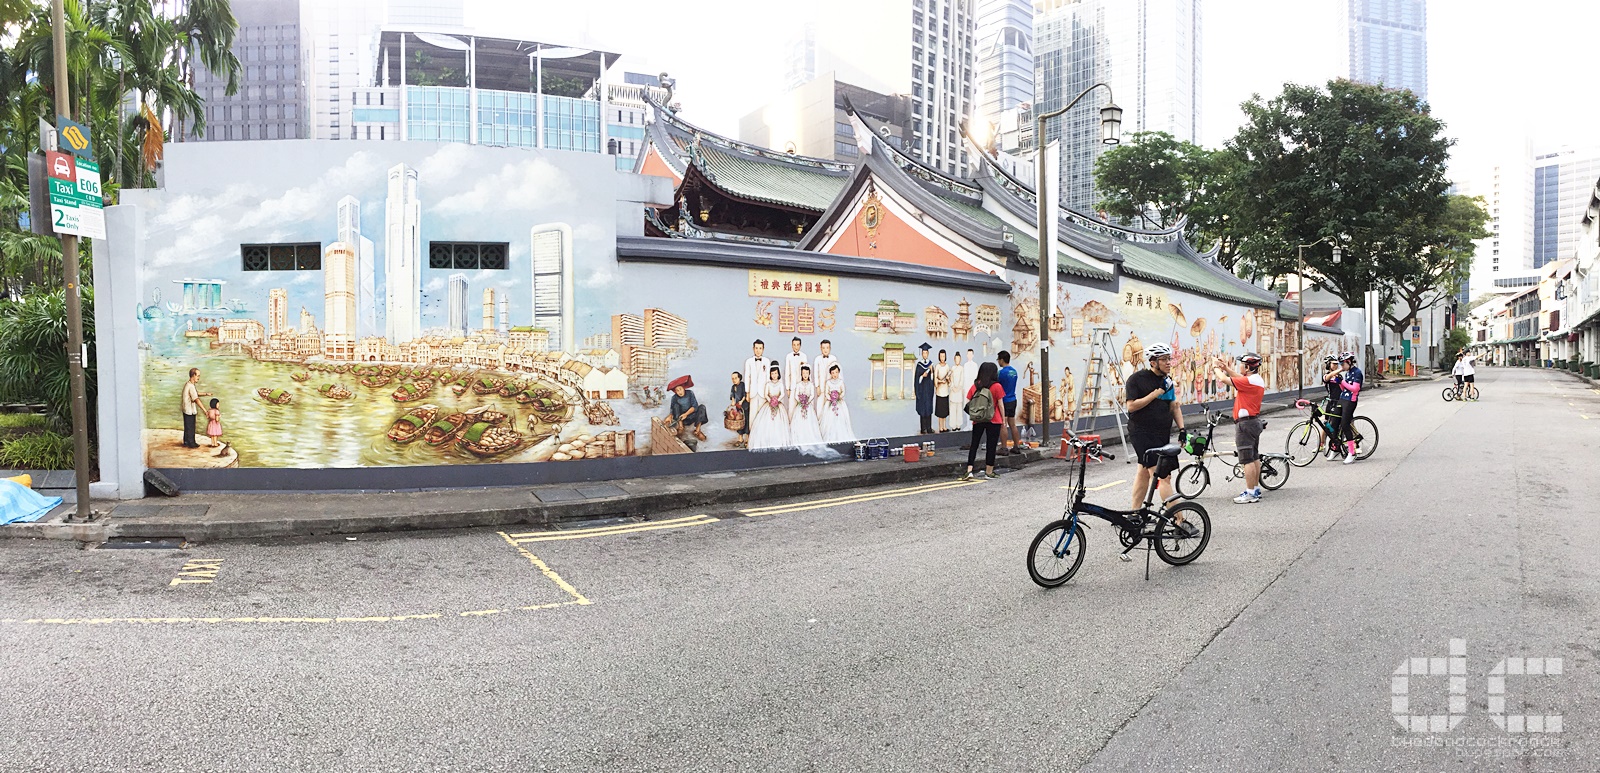 singapore,thian hock keng temple,mural,yip yew chong,天福宫,singapore hokkien festival 2017,telok ayer street,car free sunday,wall mural,arts,where to go in singapore,